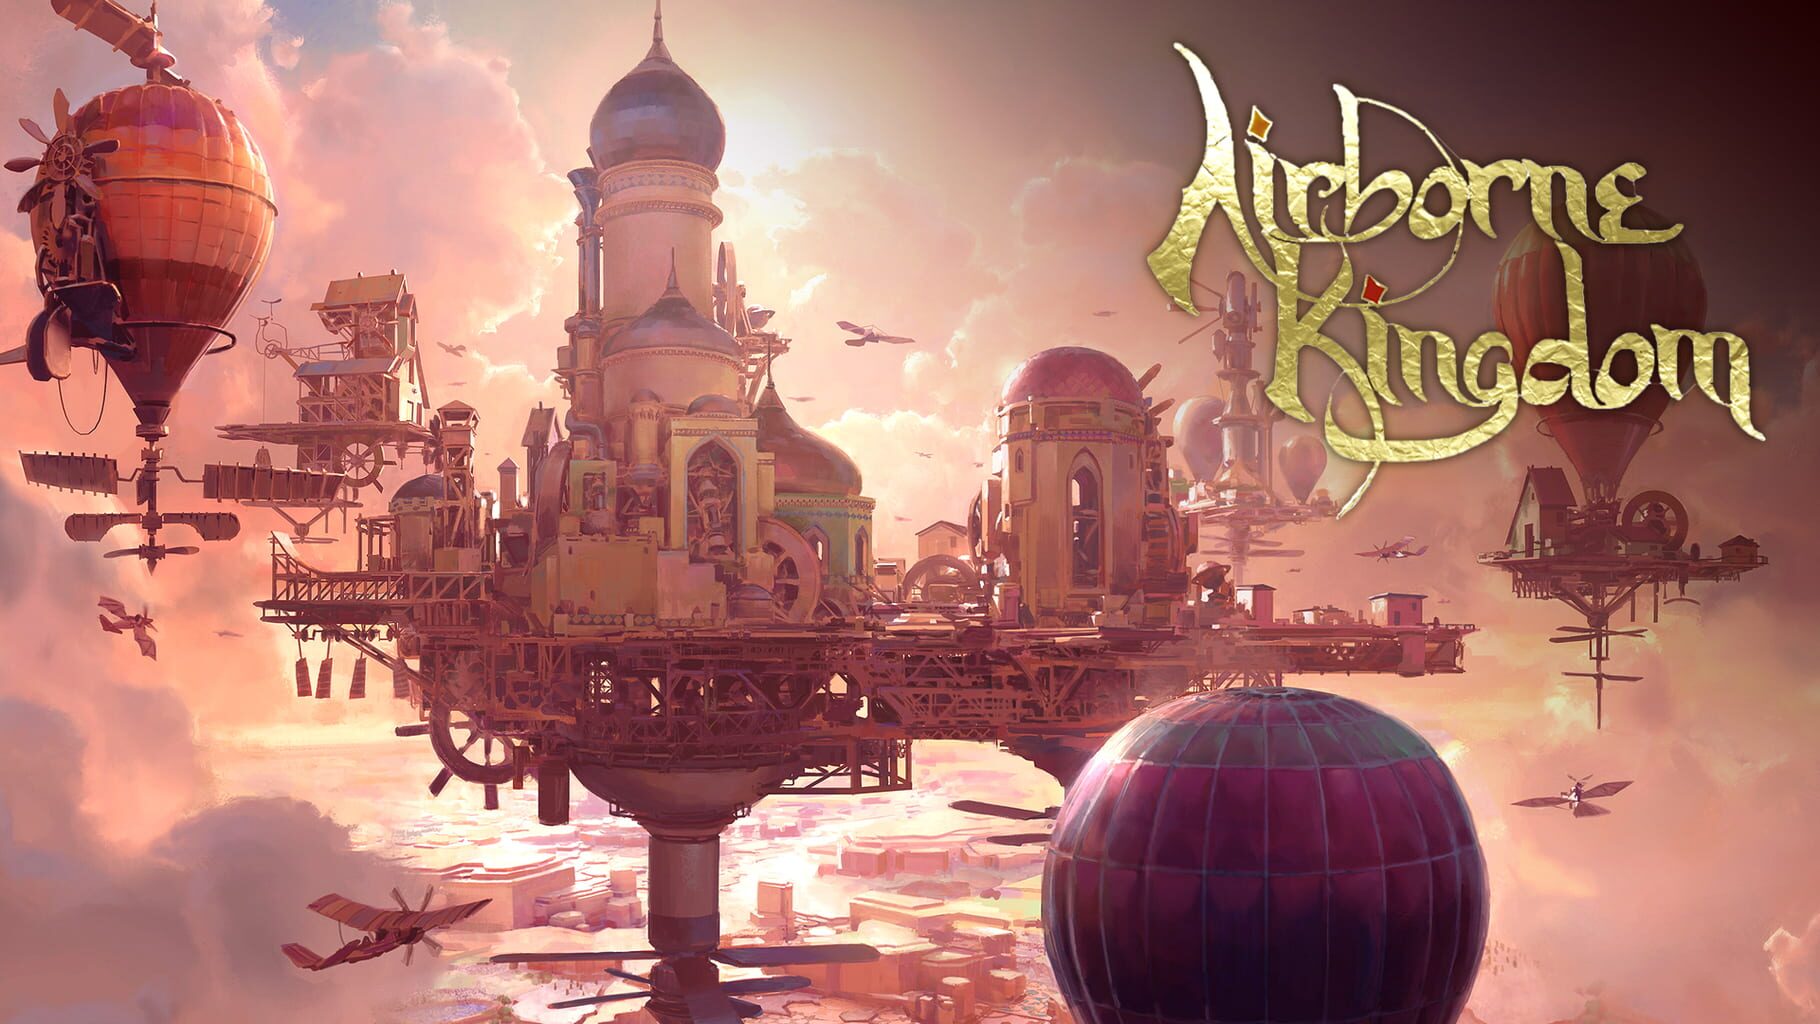 Airborne Kingdom artwork